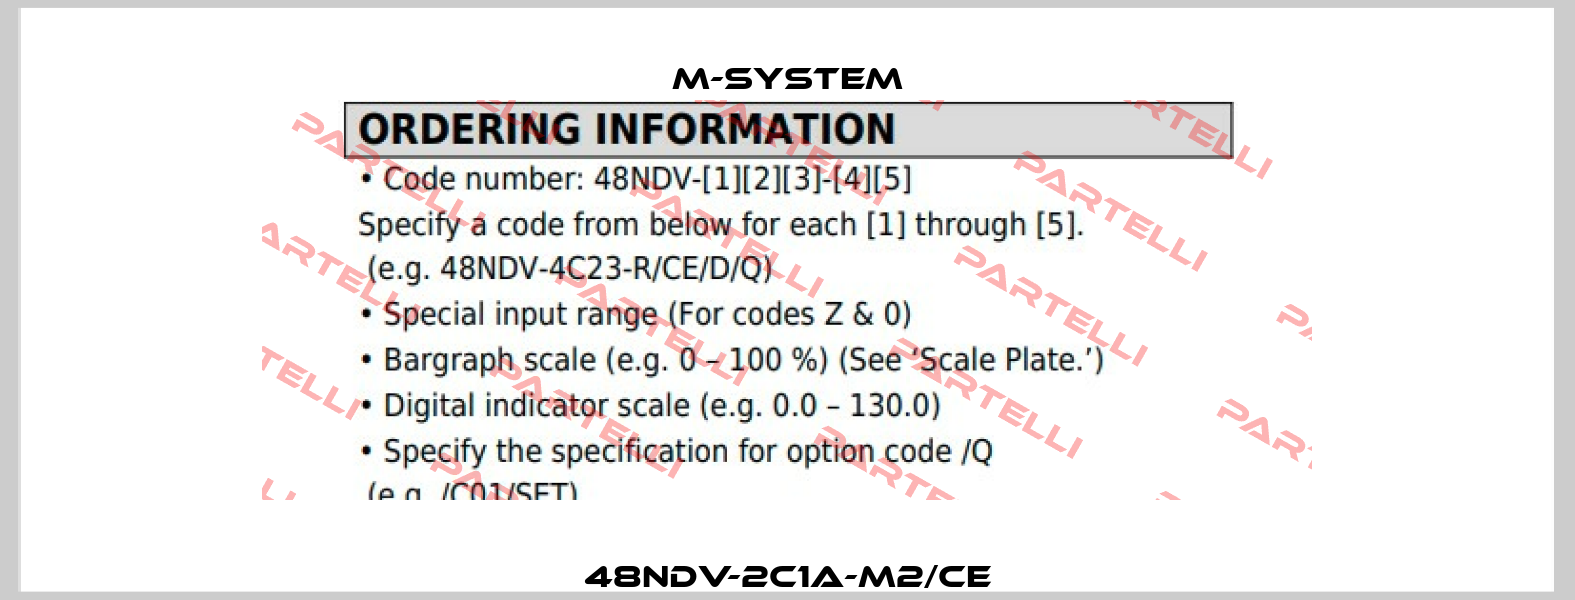 48NDV-2C1A-M2/CE M-SYSTEM